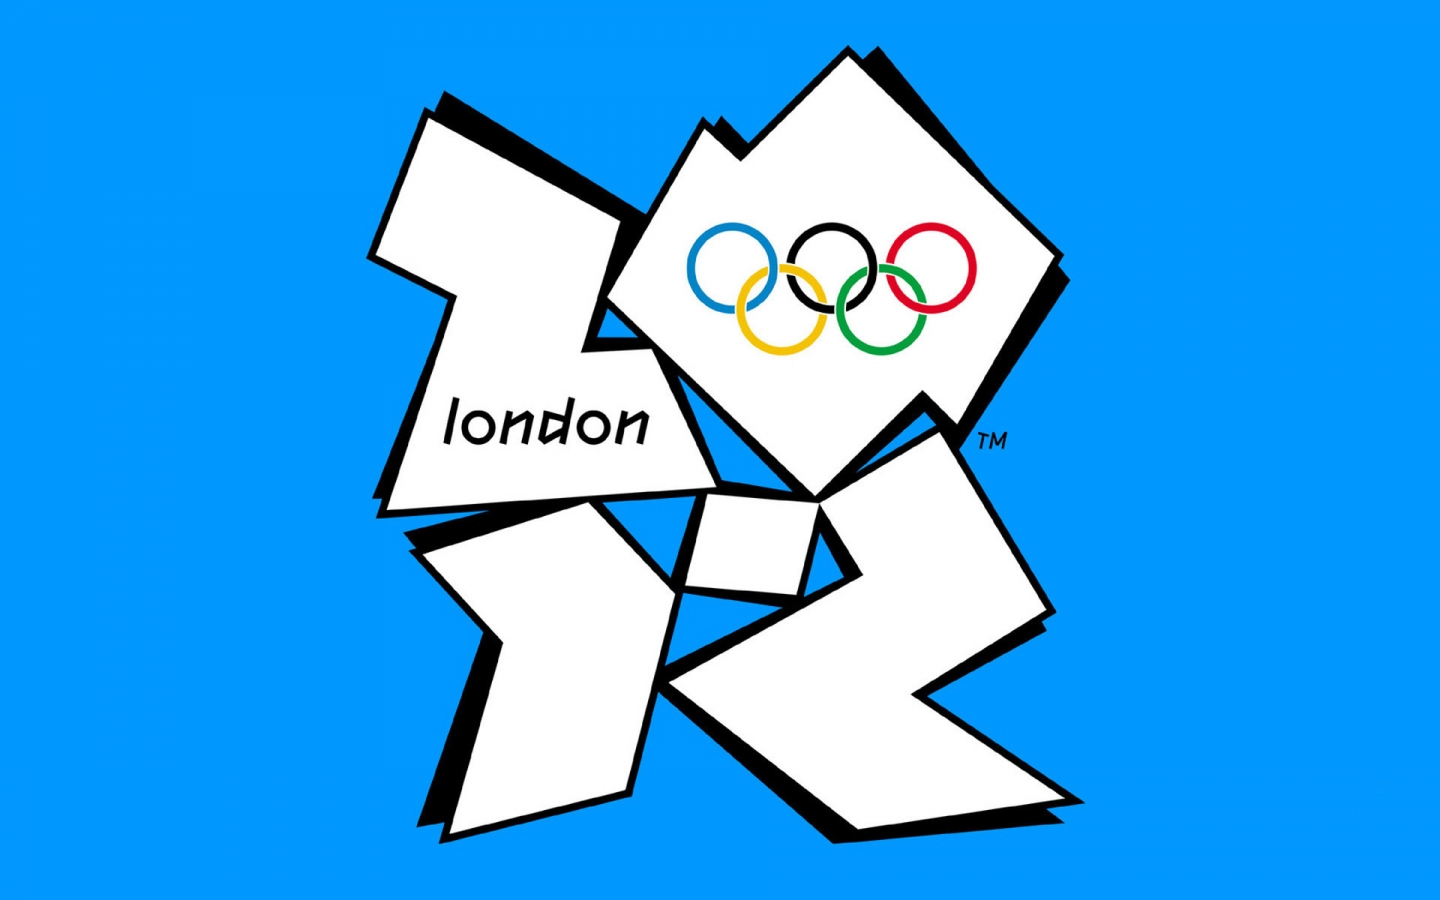 London 2012 Olympics Logo for 1440 x 900 widescreen resolution